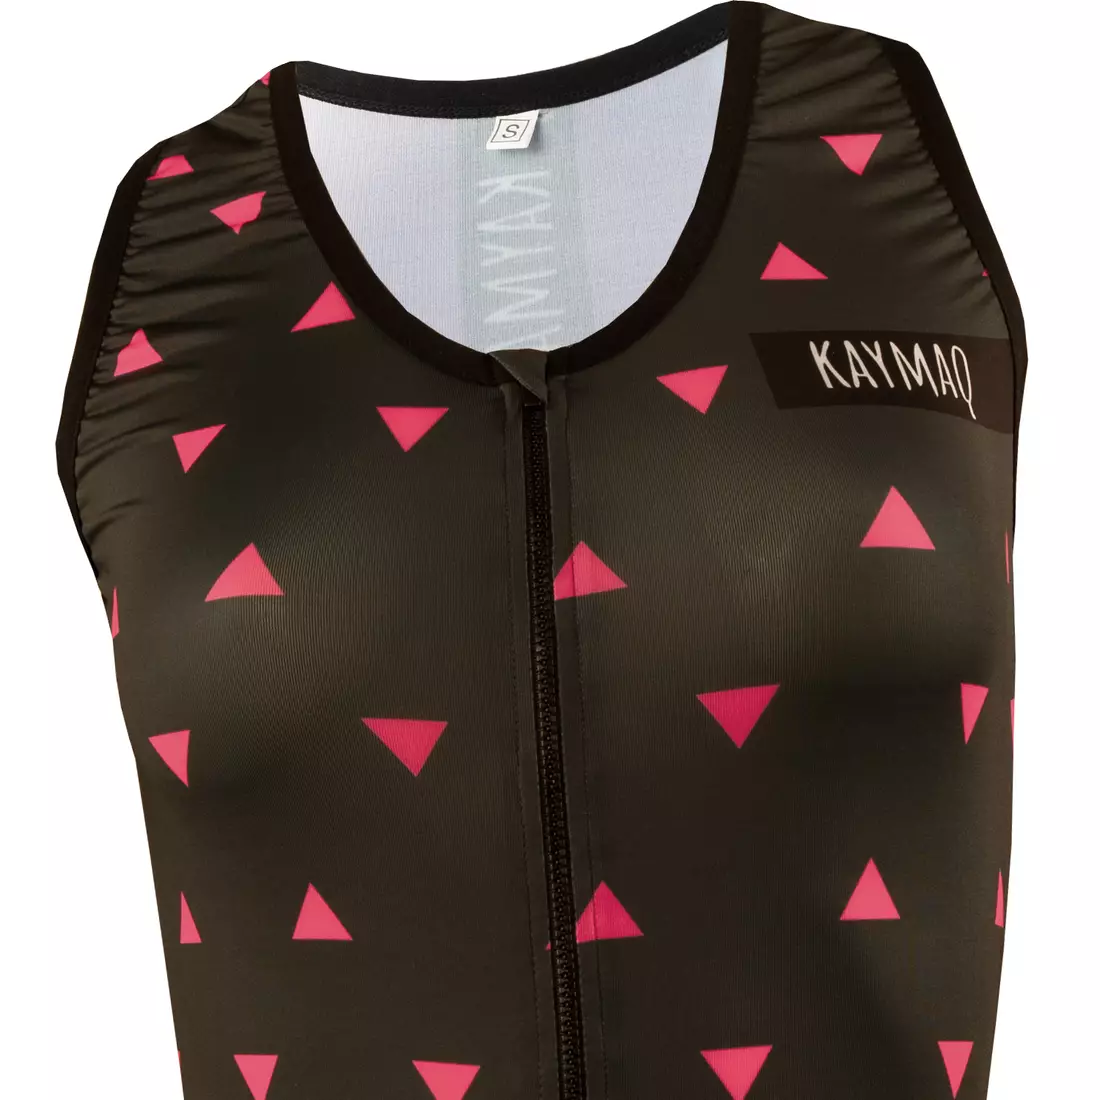 KAYMAQ DESIGN W1-W42 ärmelloses Fahrrad-T-Shirt für Frauen